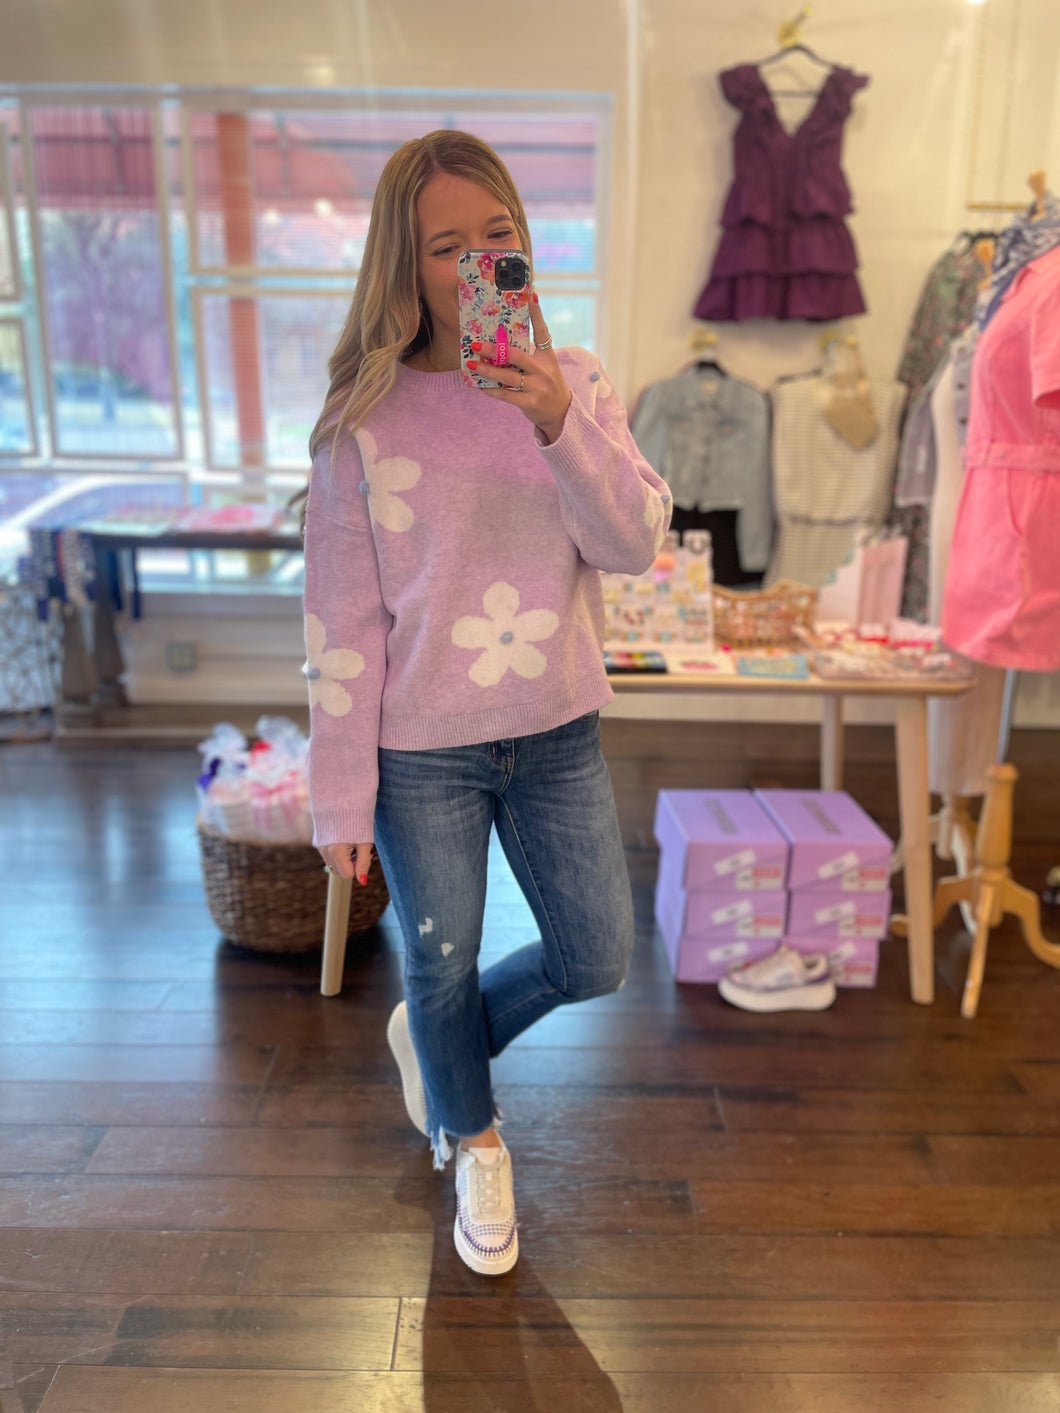 Lavender Daisy Sweater